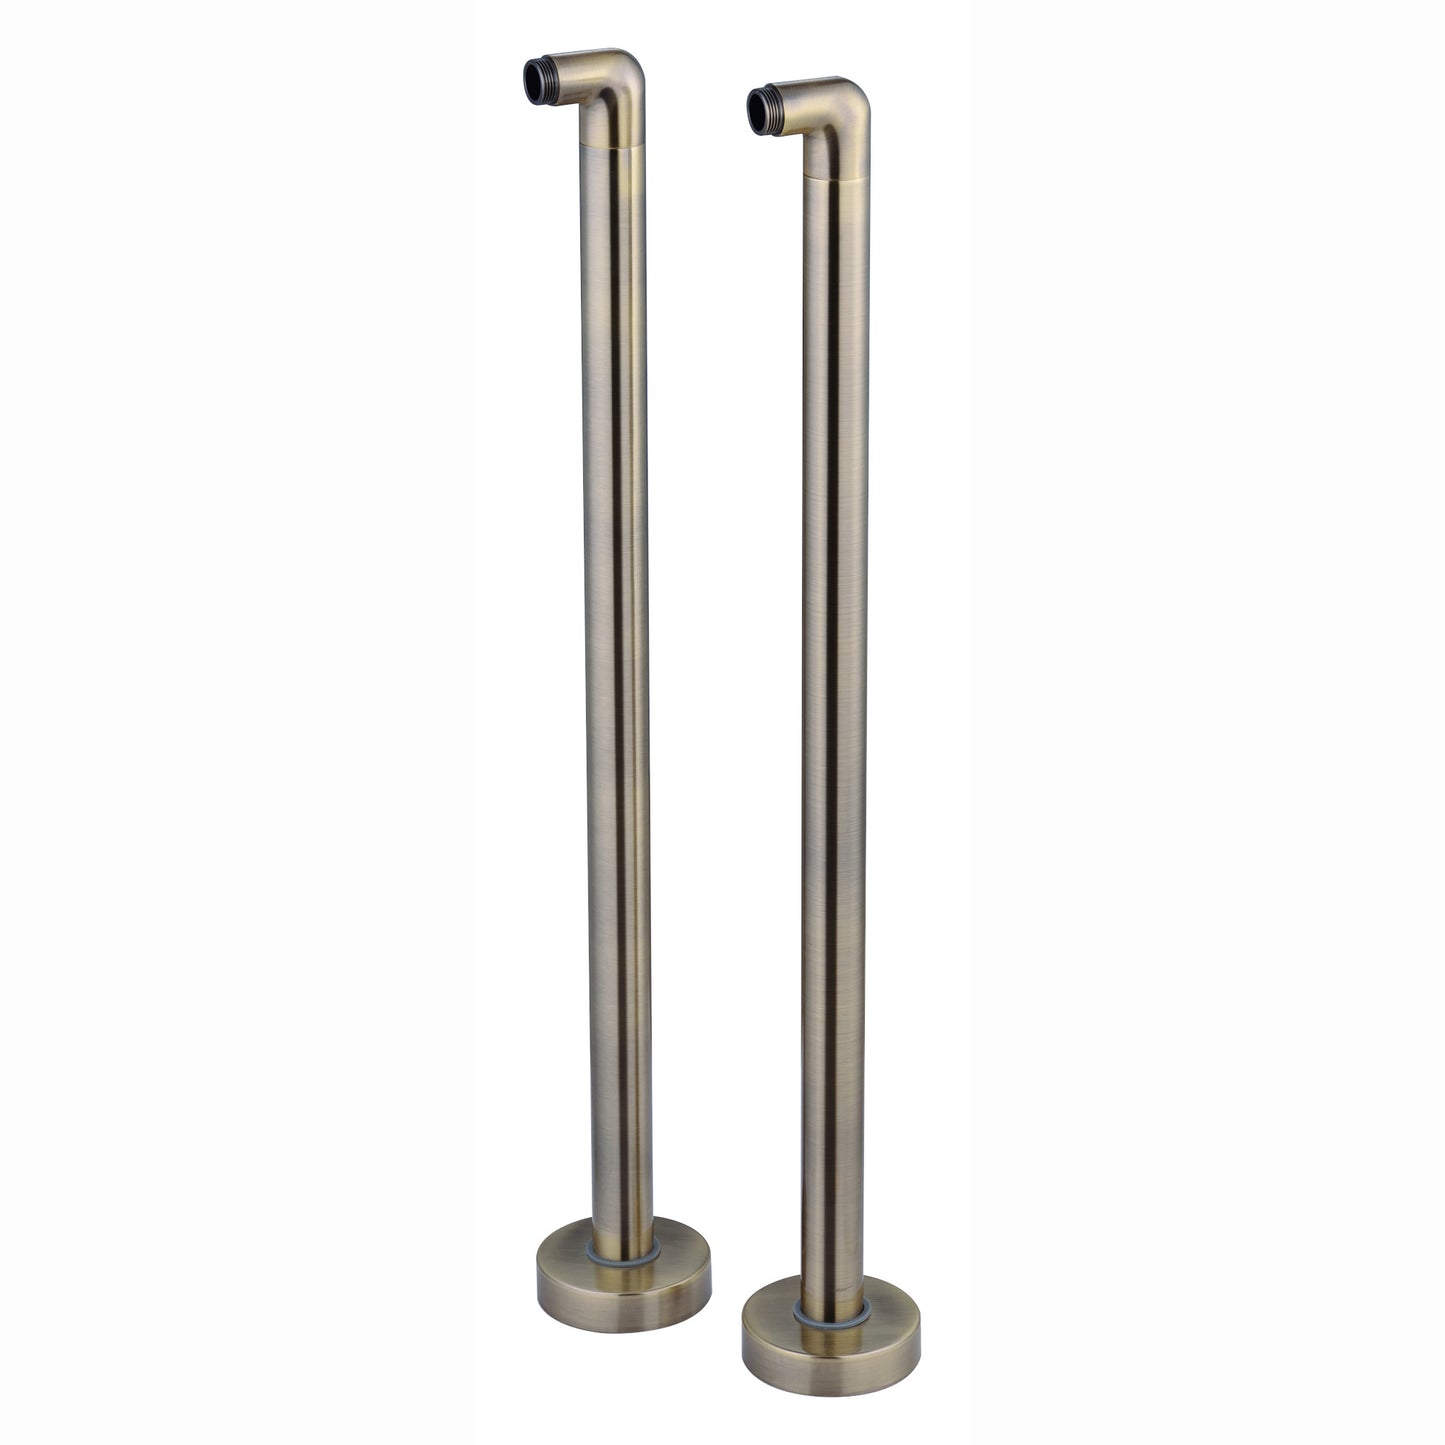 Traditional floor standing bath tap legs with return elbows - antique bronze - Taps